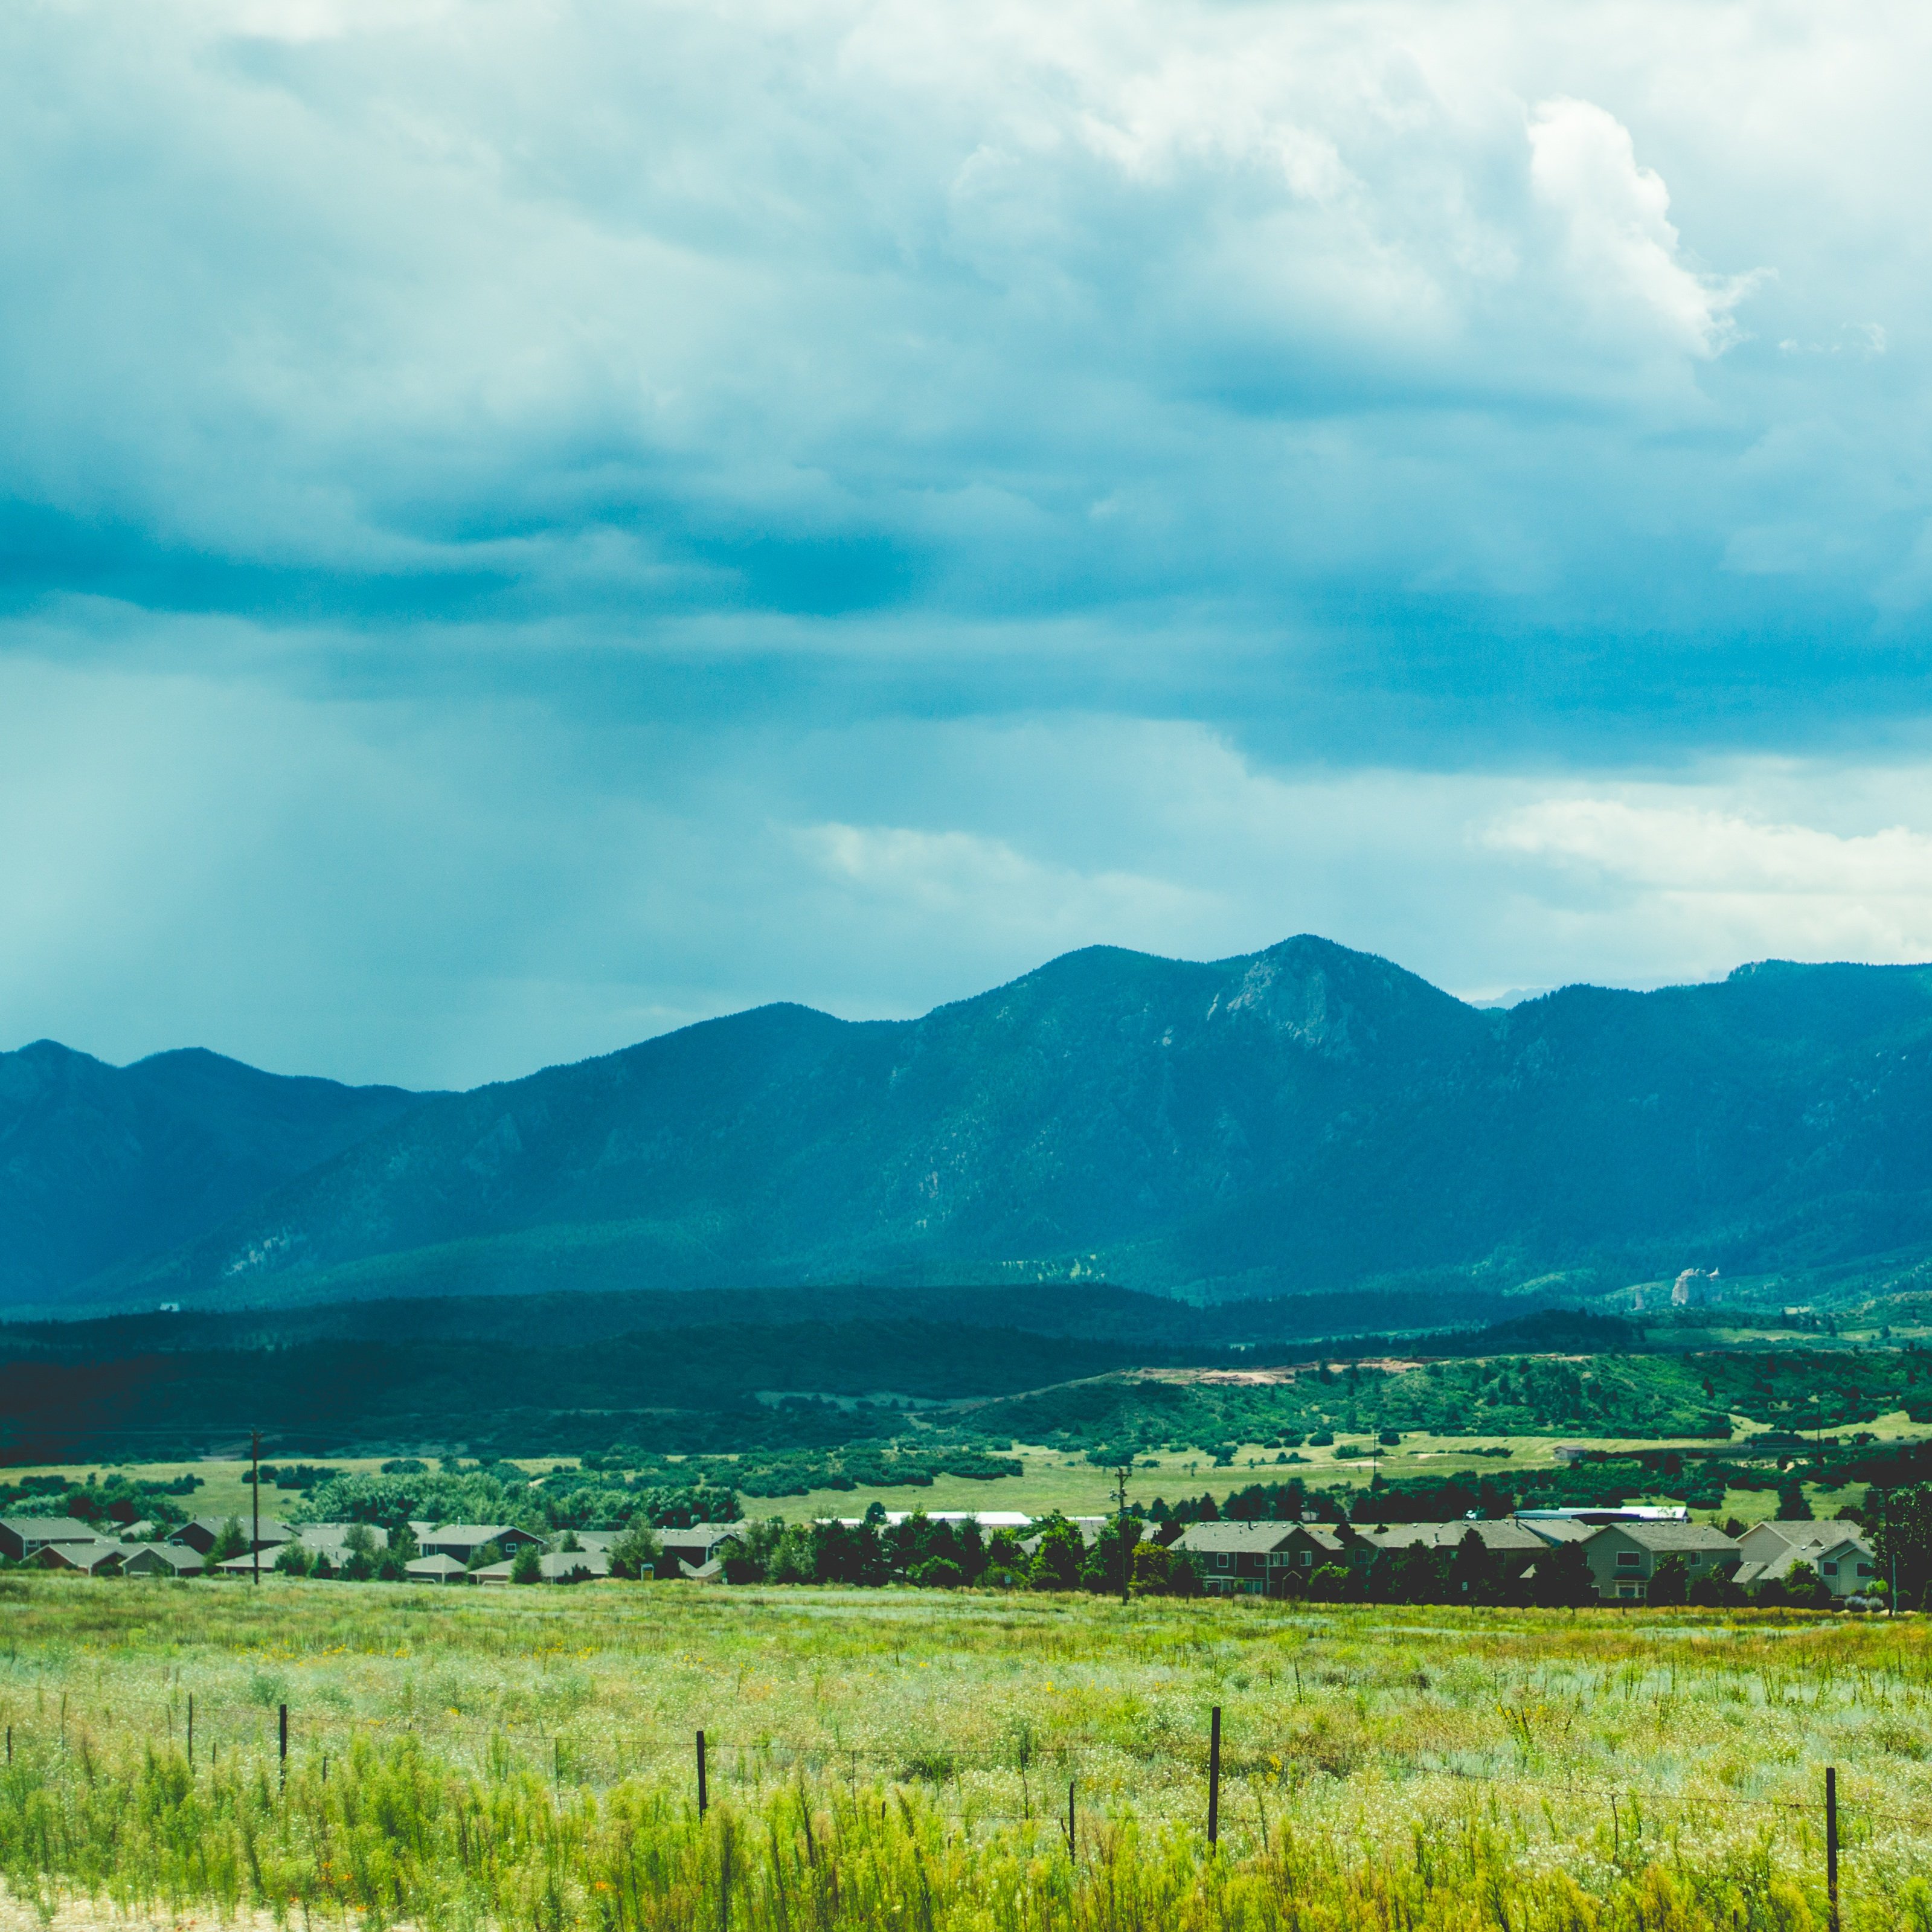 Горы равнины 4 буквы. Prairie Долина Роны. Равнины Колорадо. Горы и равнины. Колорадо природа степи.